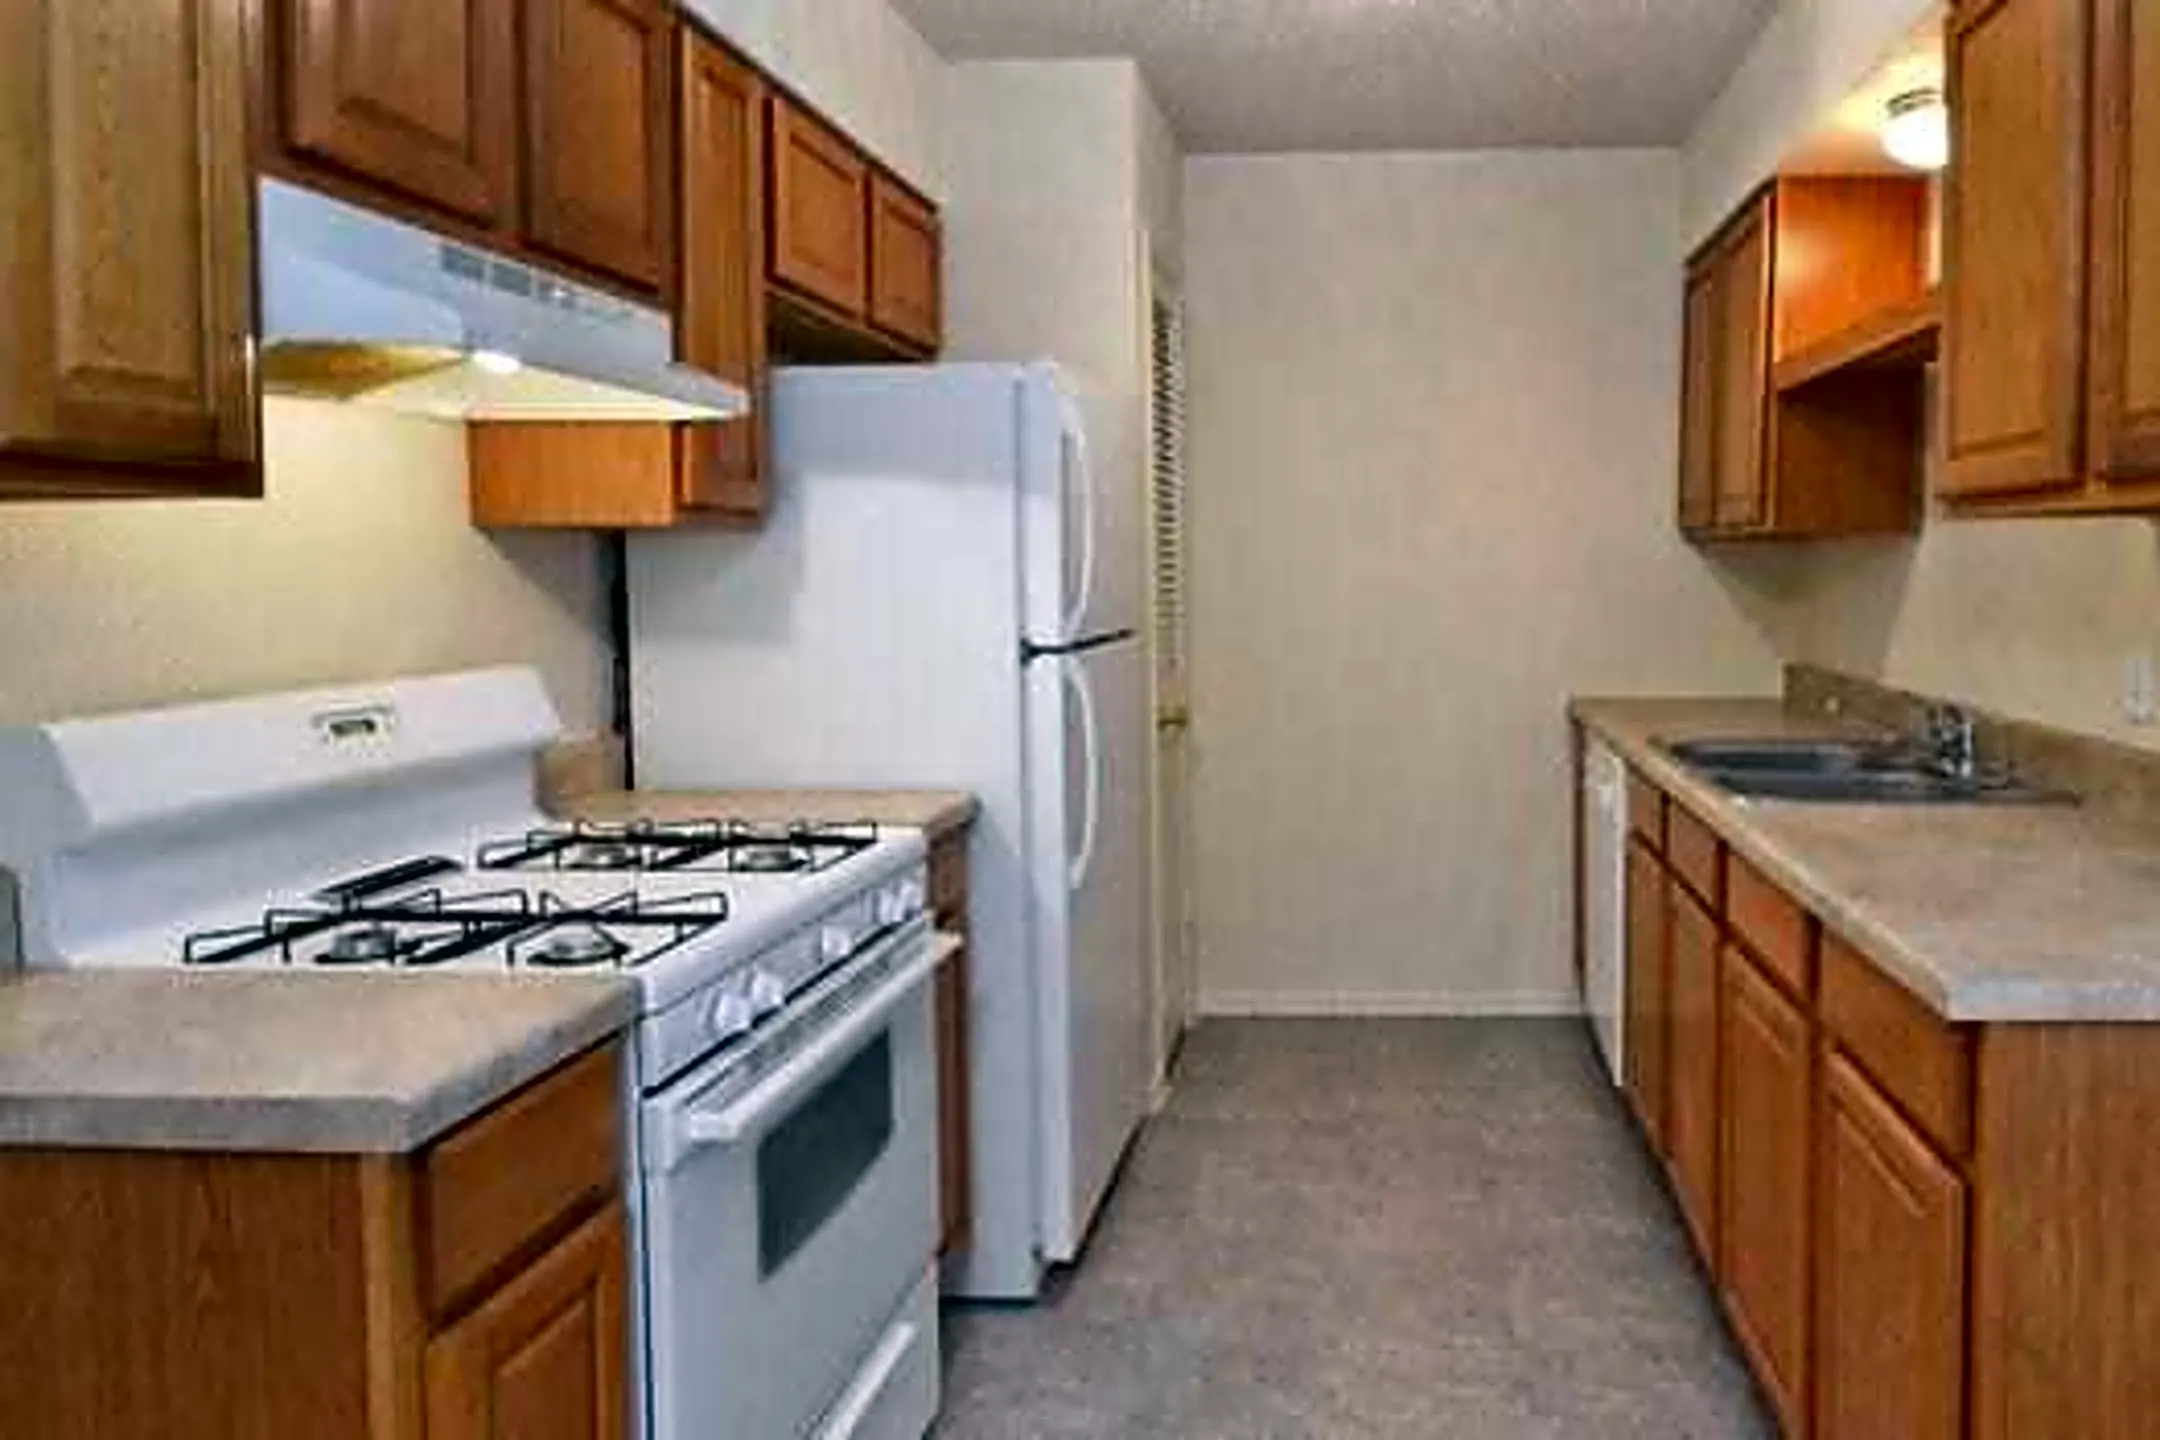 Kitchen - Sheppard's Edge Apartments - Wichita Falls, TX